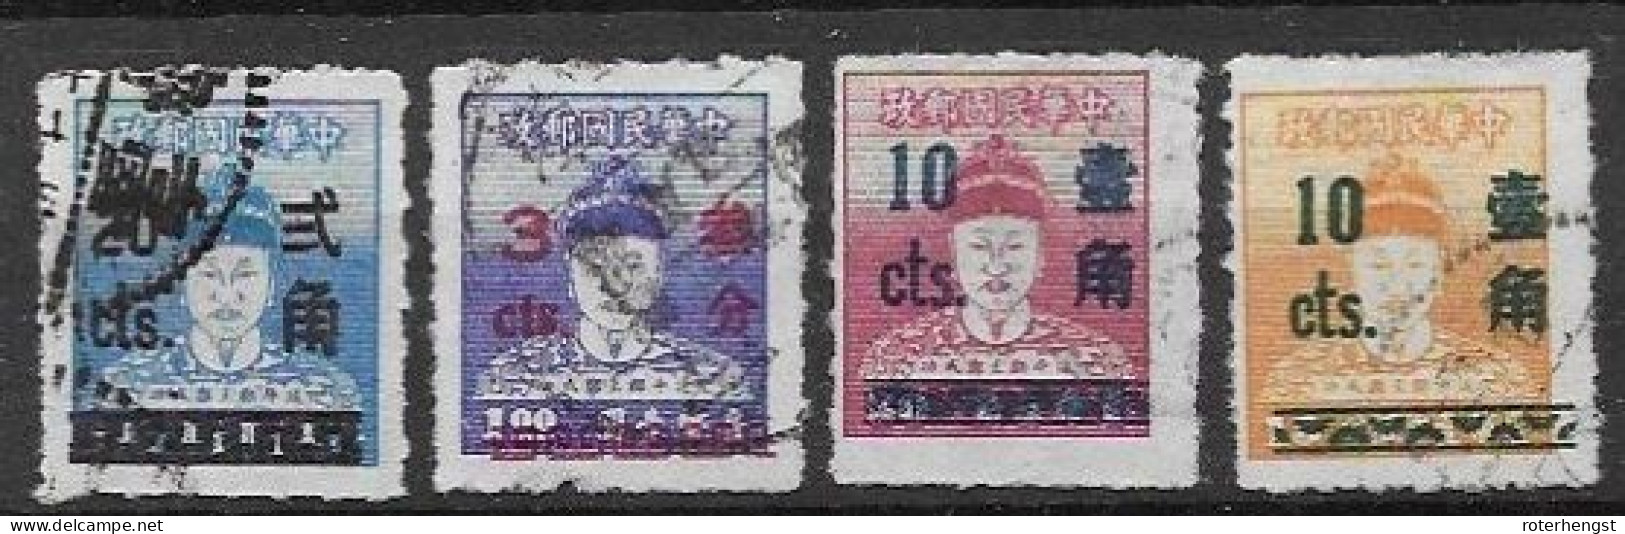 Taiwan VFU 1955 Set - Used Stamps